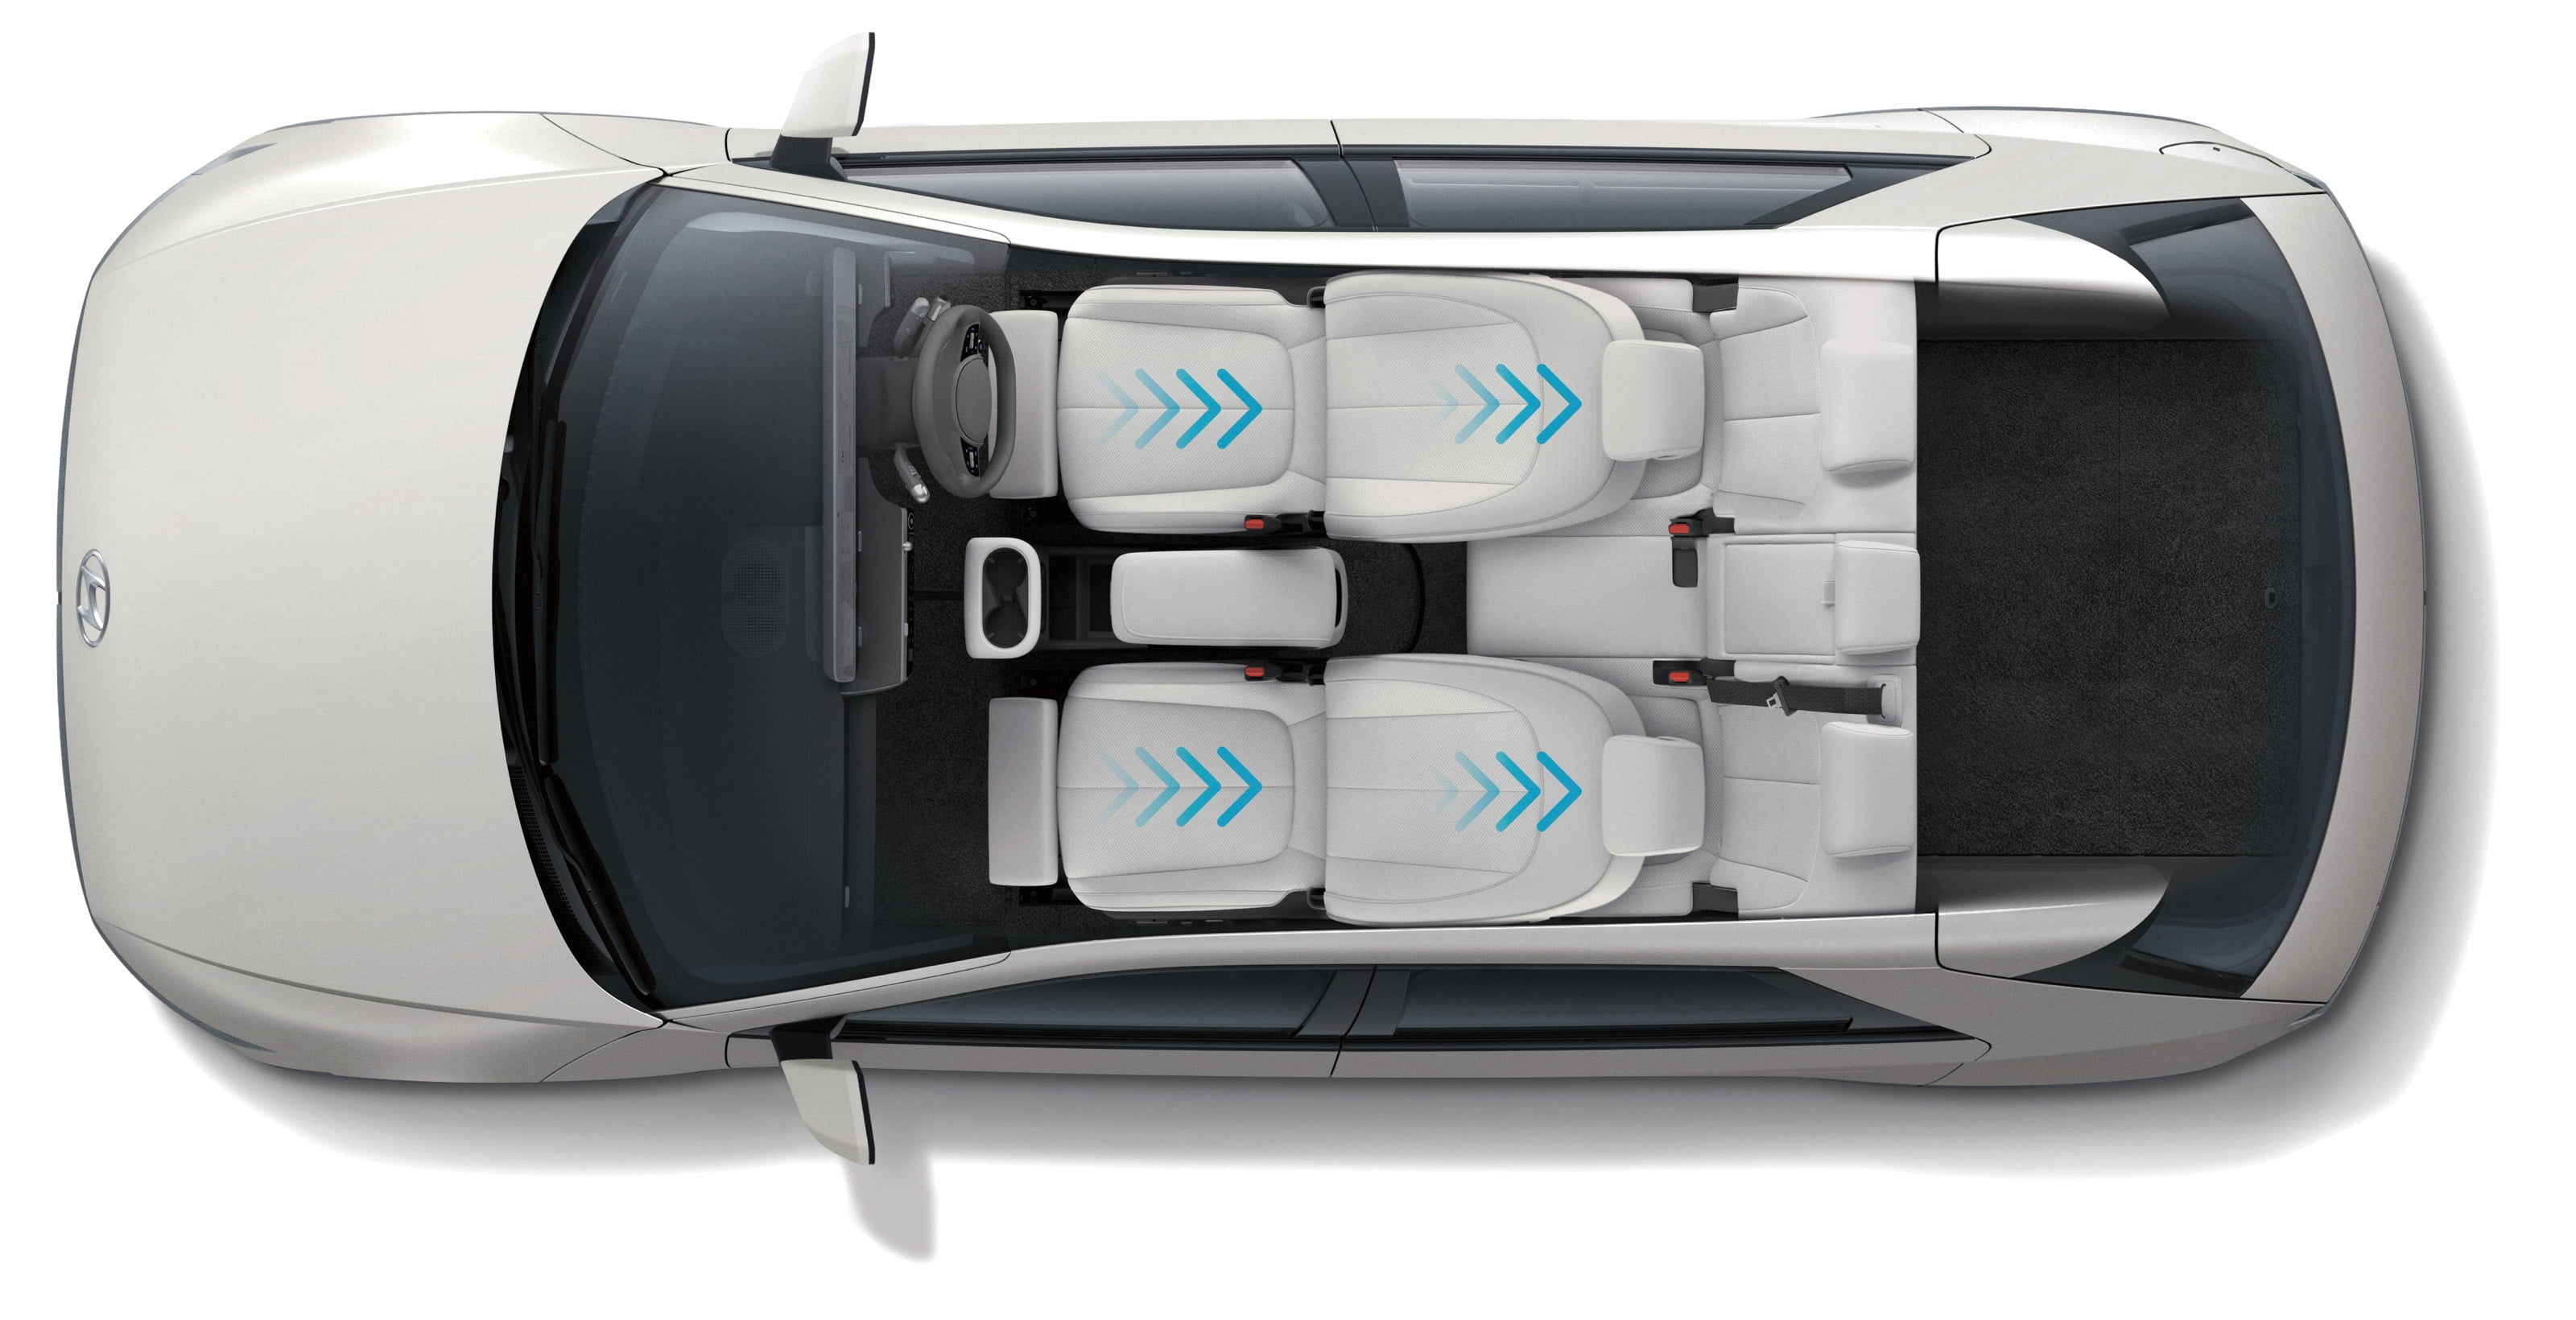 IONIQ 5 (アイオニック 5) 電気自動車 EV インテリア リラクゼーションコンフォートシート - Hyundai Mobility Japan (ヒョンデモビリティジャパン)